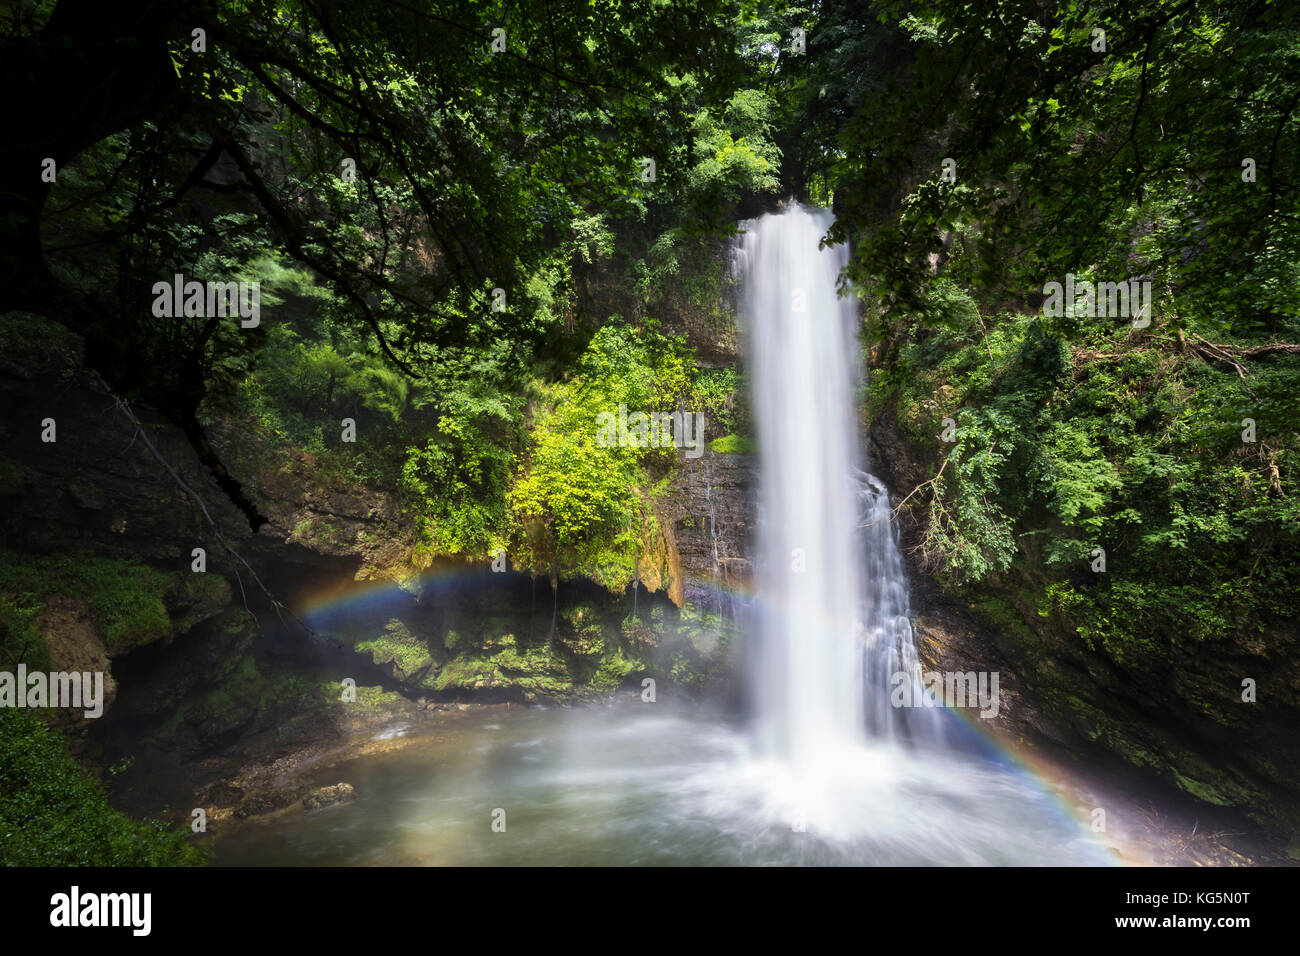 Ferrera waterfall creating a rainbow in spring, Ferrera di Varese, Lombardy, Italy. Stock Photo